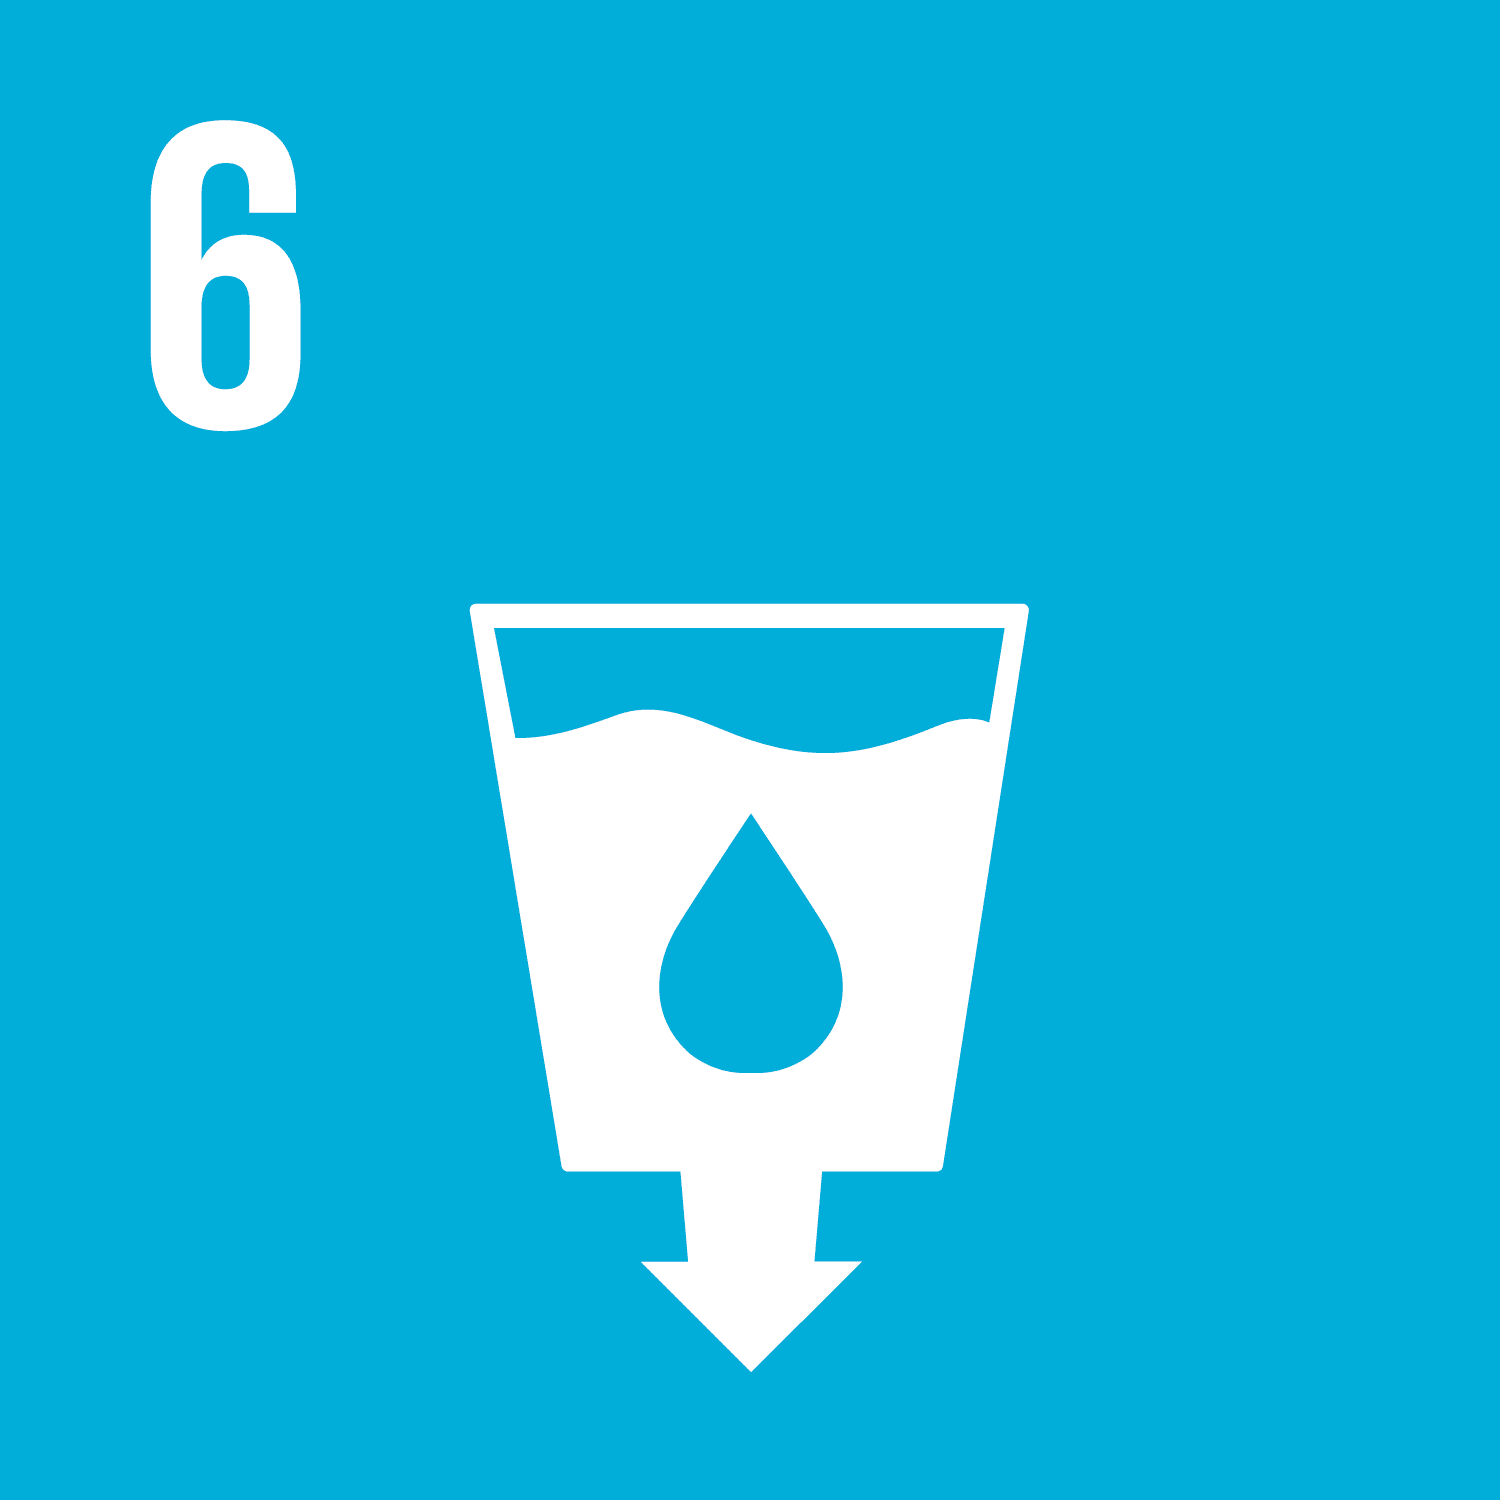 SDG 6. Clean water and sanitation.